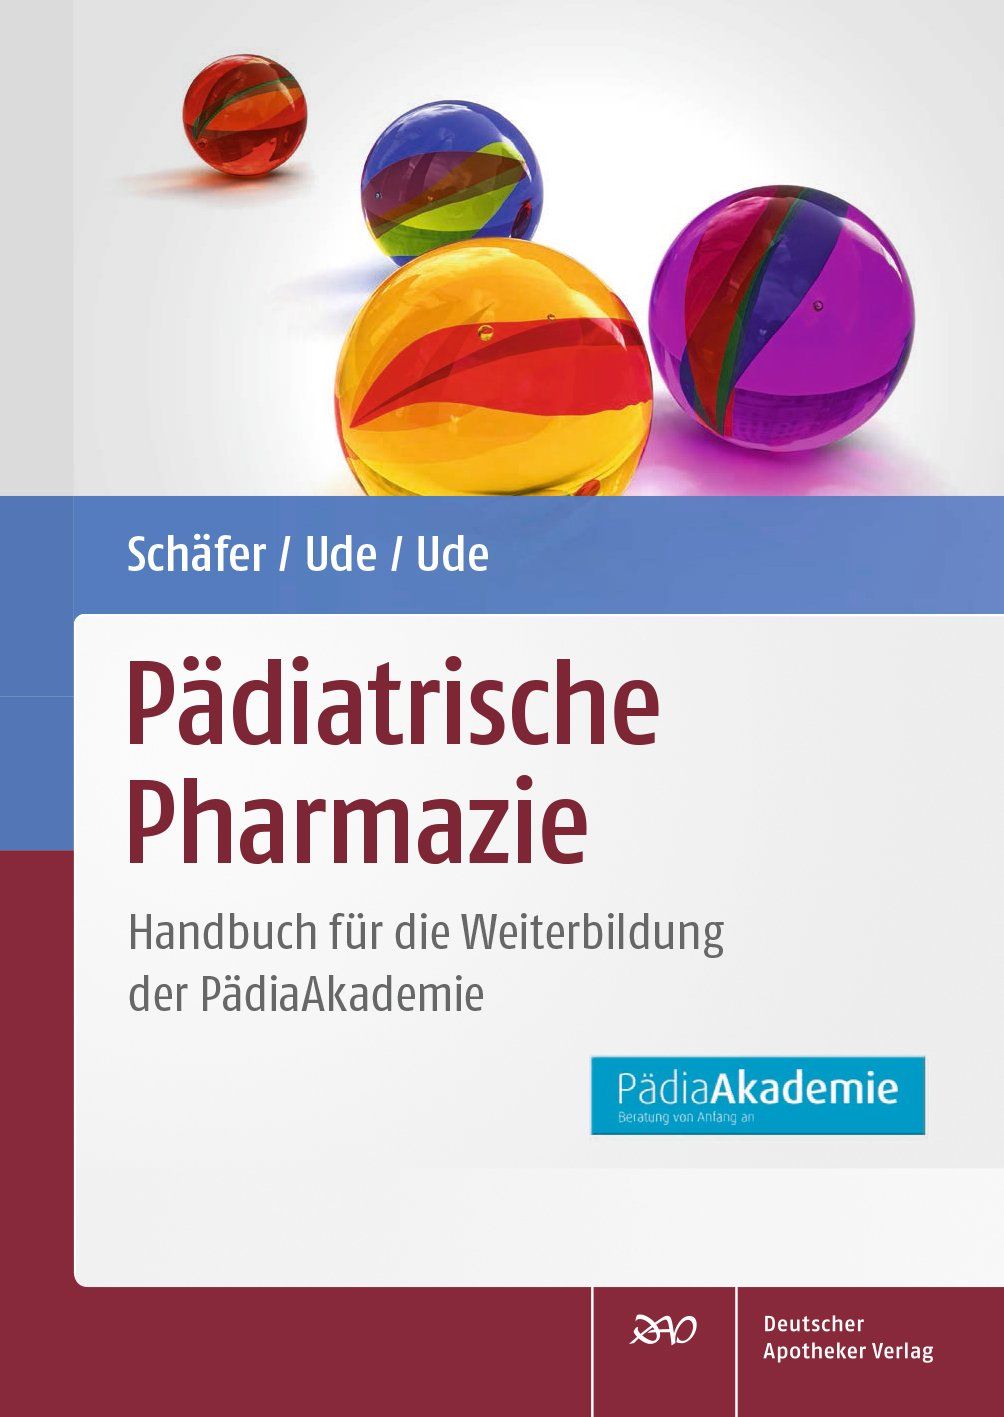 Pädiatrische Pharmazie